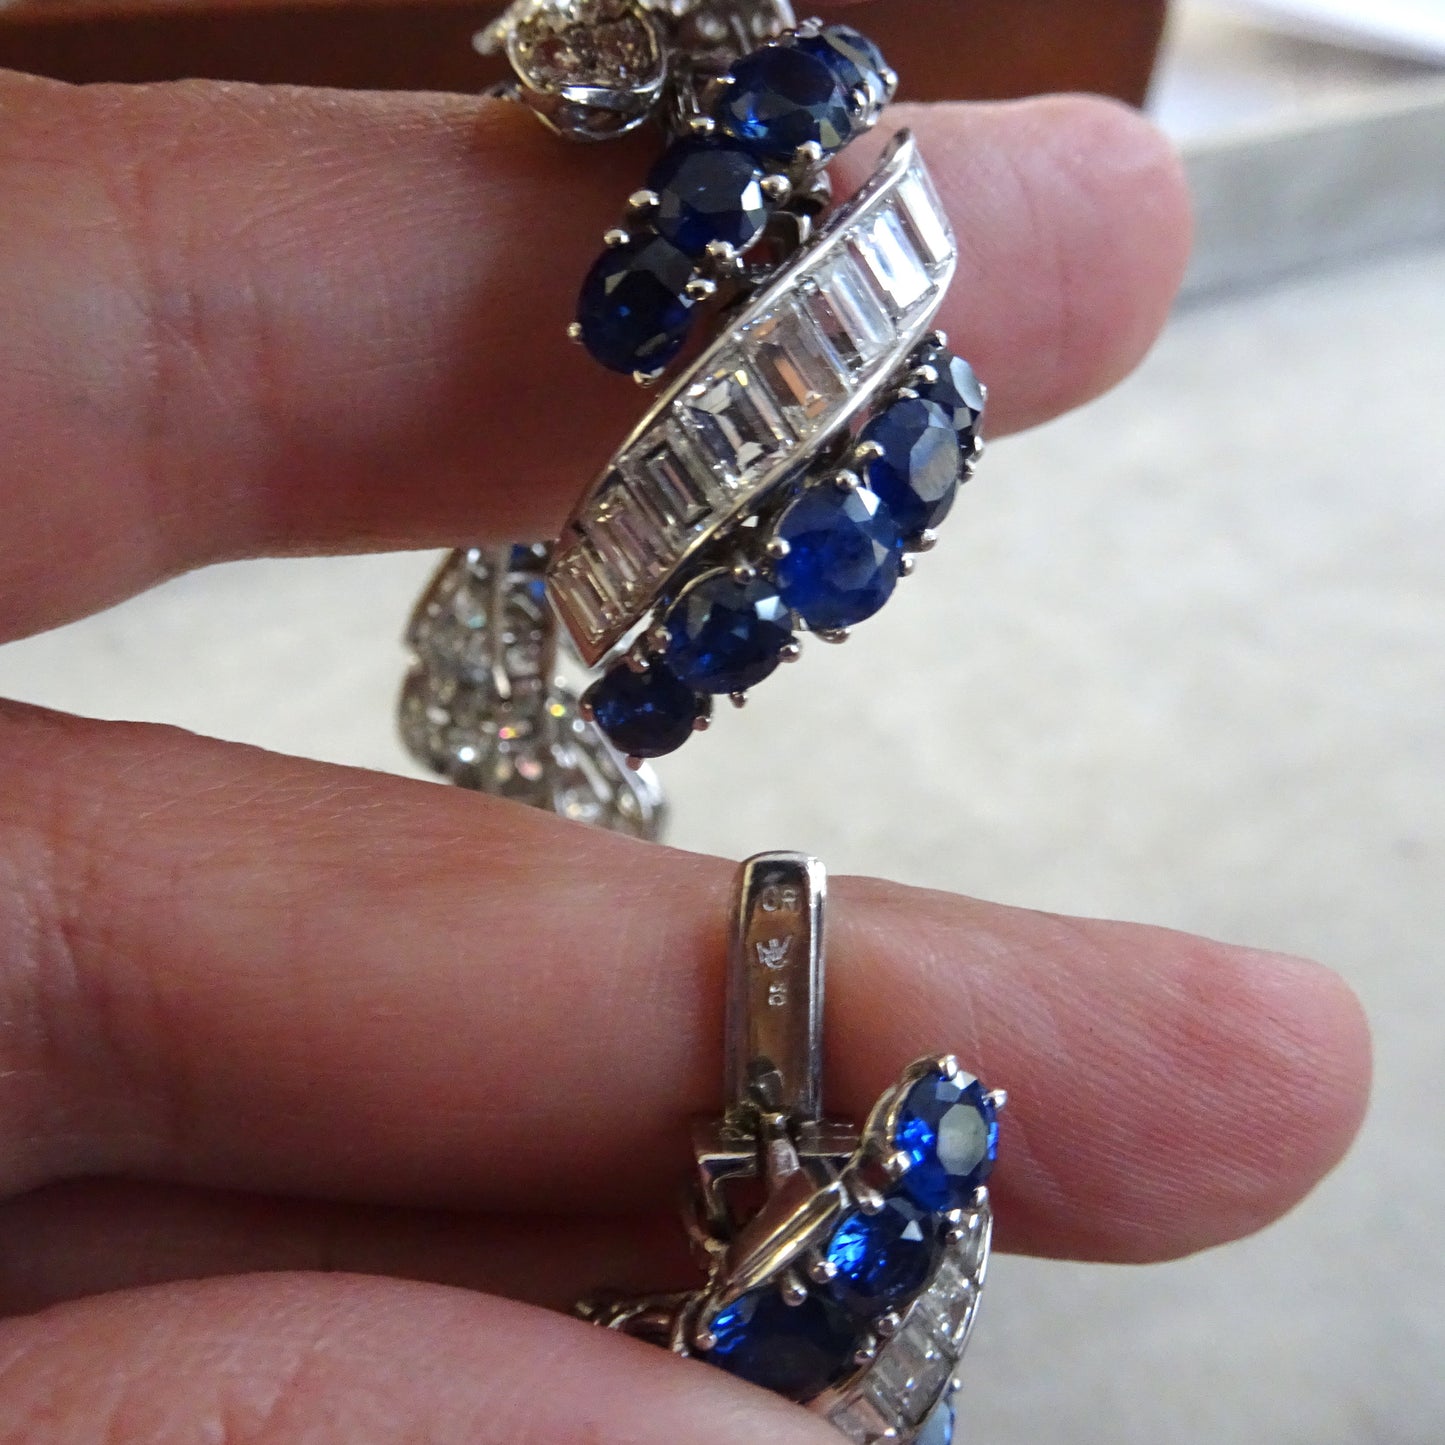 1940s Platinum Diamond & Blue Sapphire Bracelet close-up of clasp